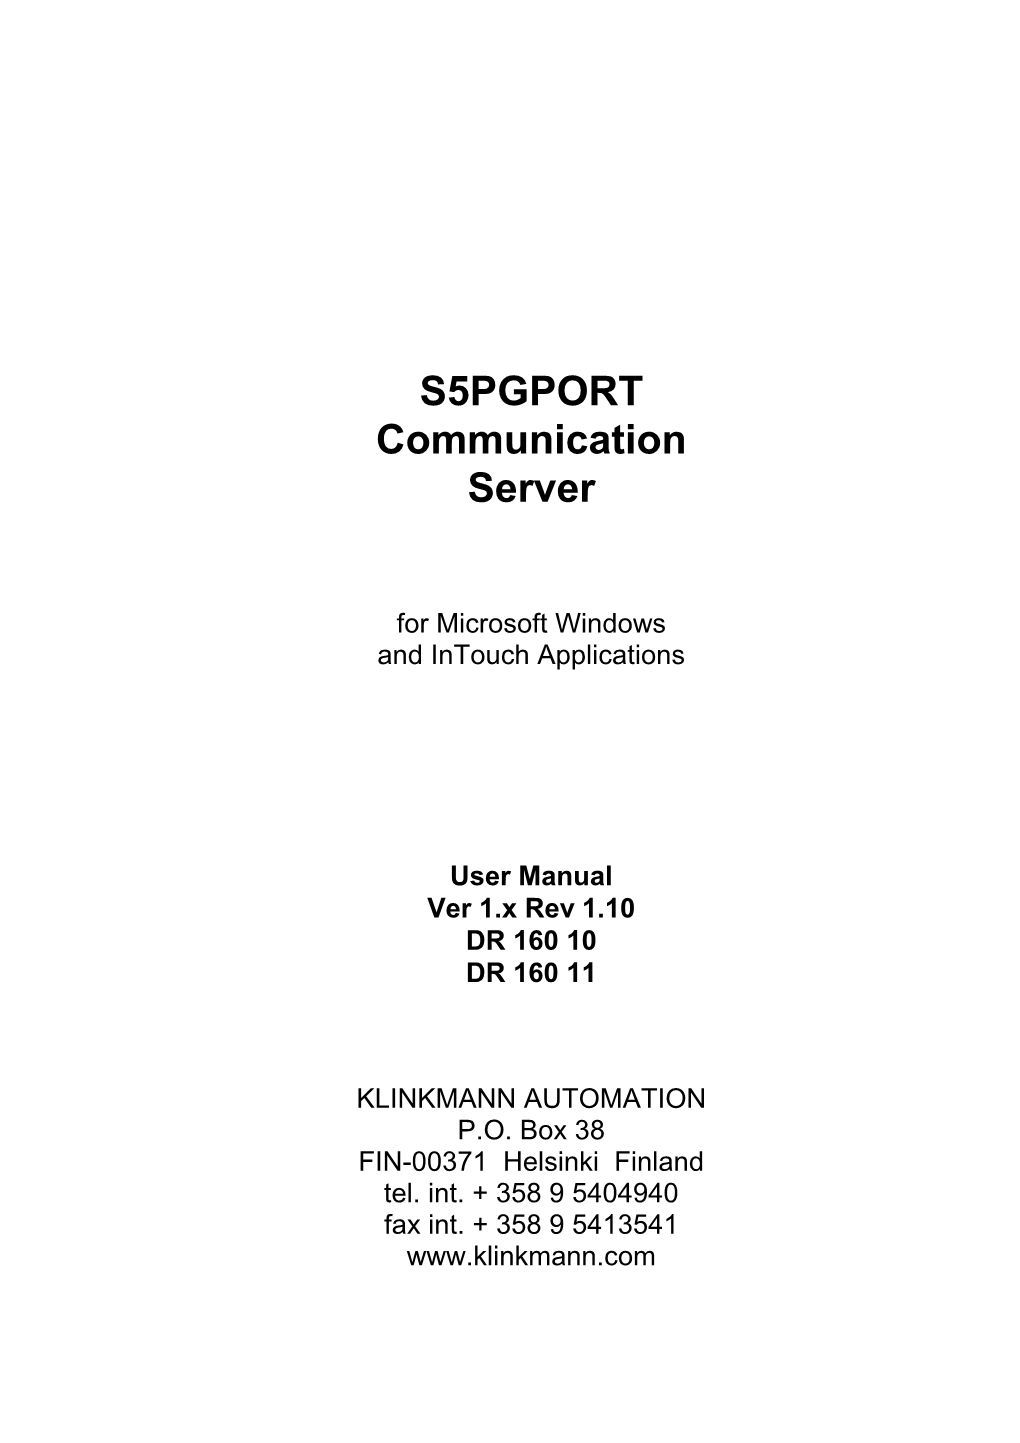 S5PGPORT Communication Server